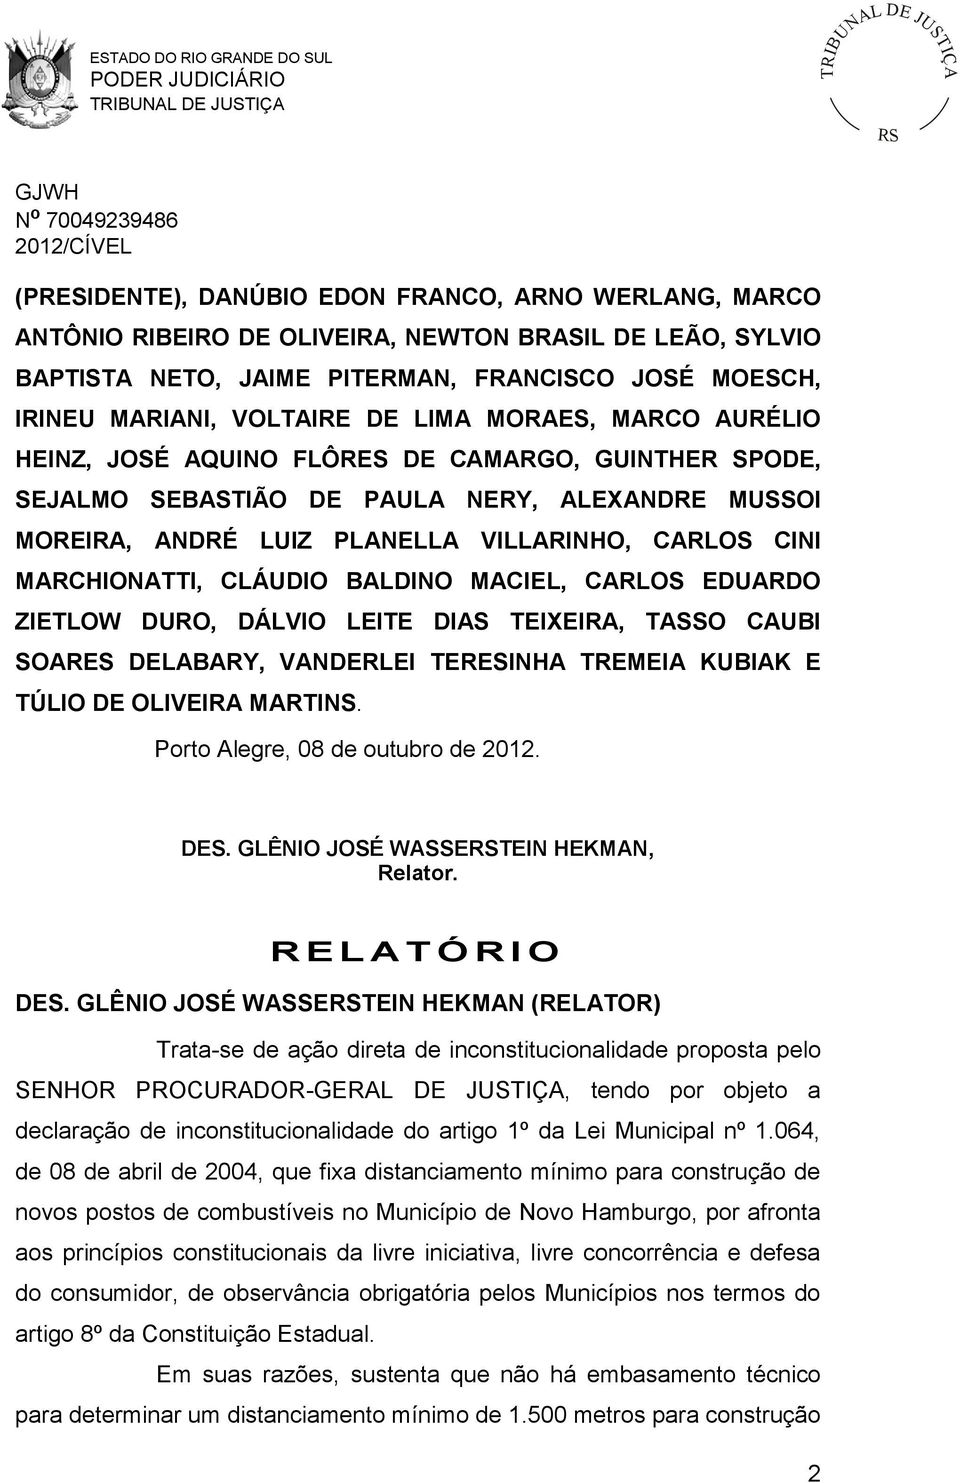 CLÁUDIO BALDINO MACIEL, CARLOS EDUARDO ZIETLOW DURO, DÁLVIO LEITE DIAS TEIXEIRA, TASSO CAUBI SOARES DELABARY, VANDERLEI TERESINHA TREMEIA KUBIAK E TÚLIO DE OLIVEIRA MARTINS.